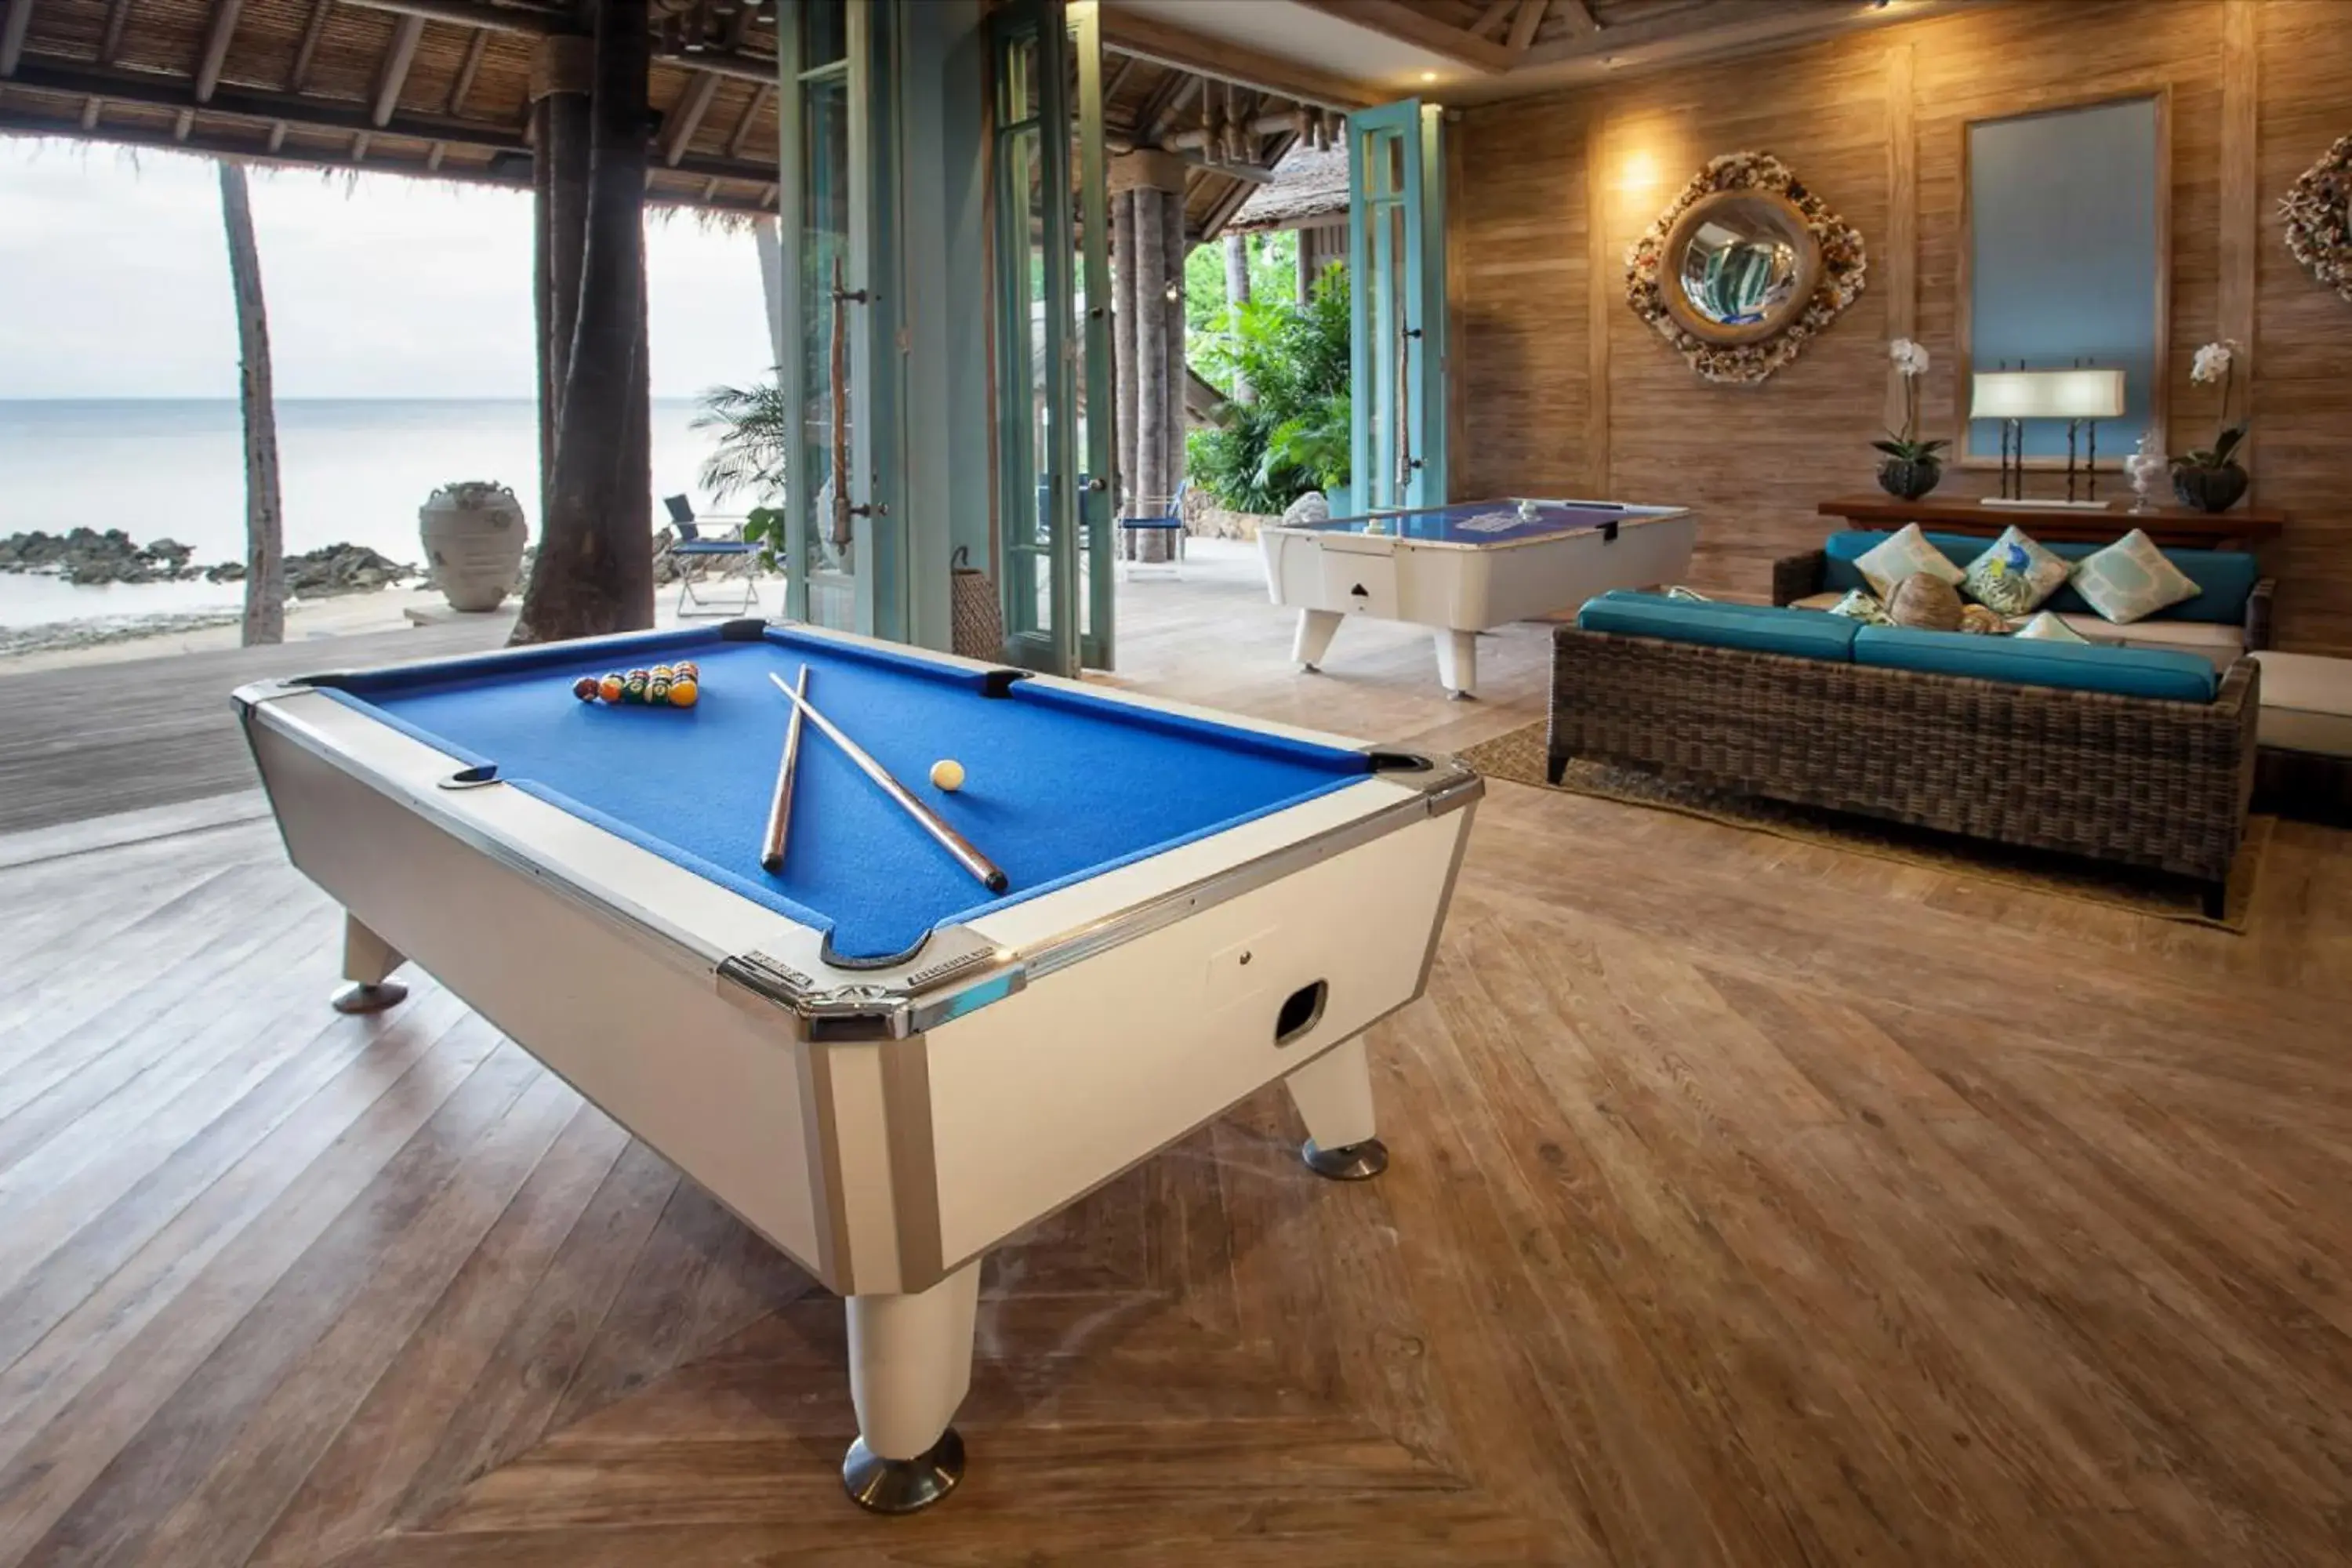 Game Room, Billiards in Four Seasons Resort Koh Samui